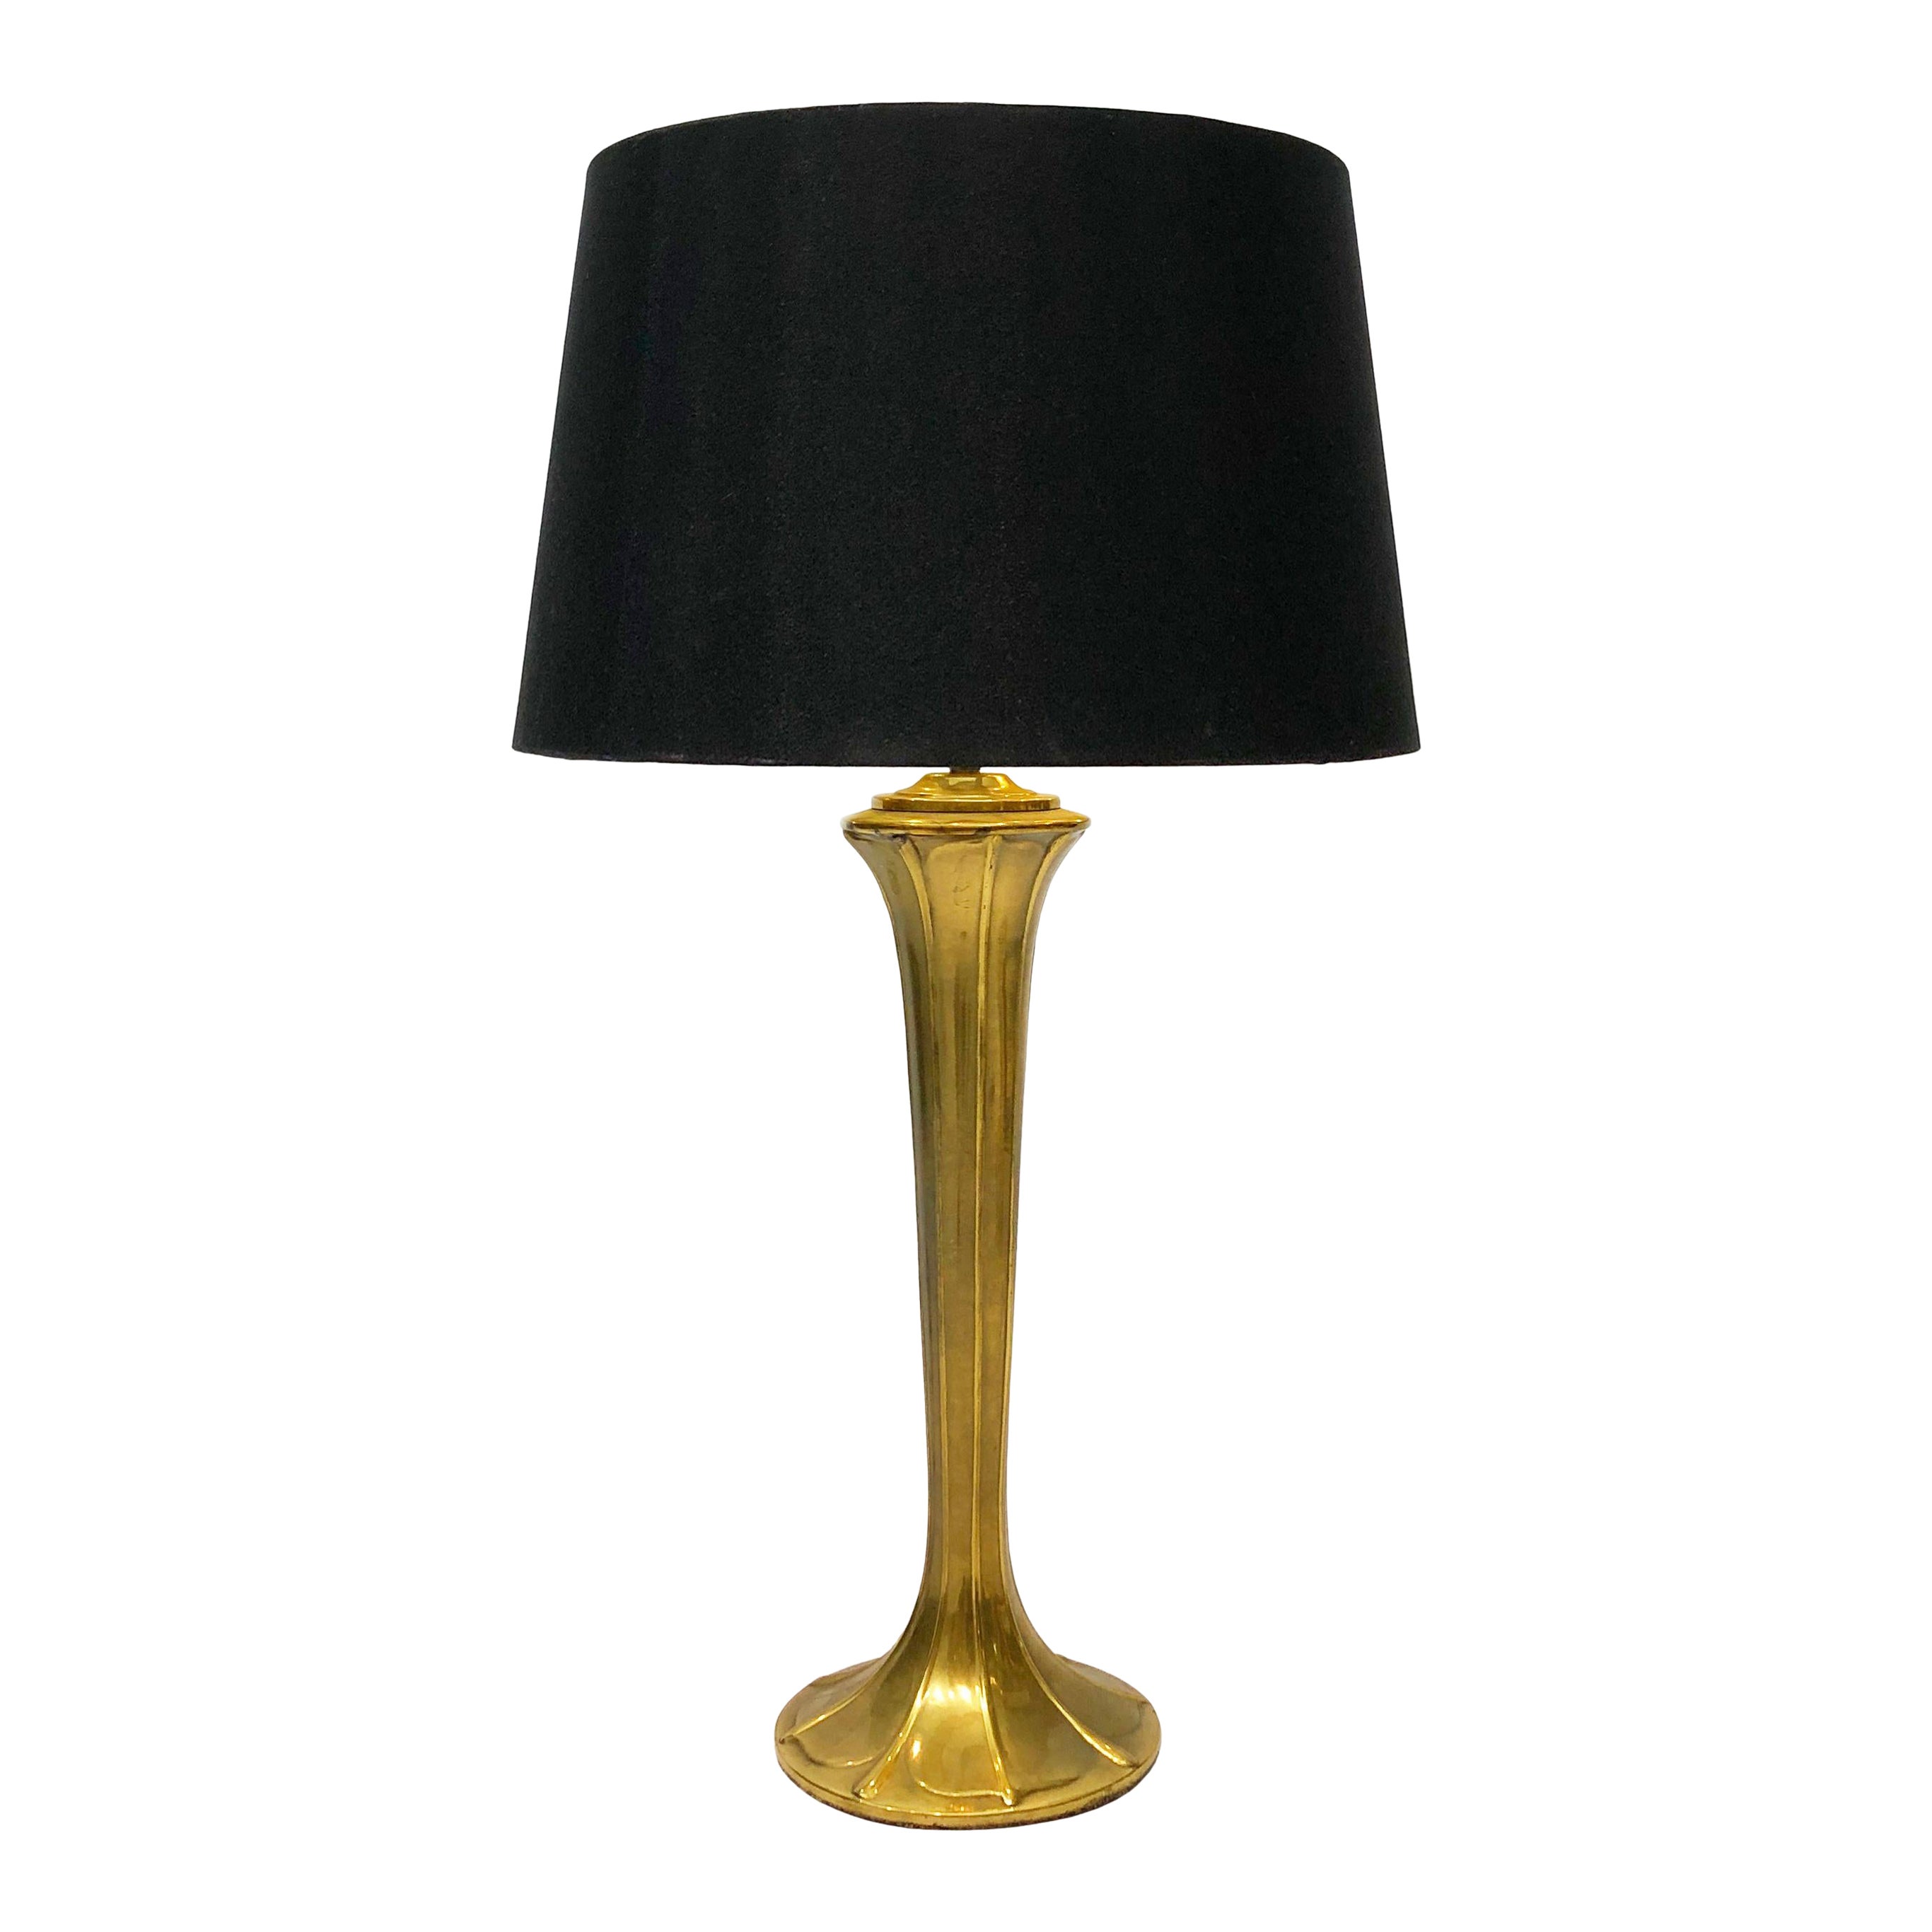 Brass Art Nouveau Style Table Lamp 1970s Vintage art deco Hollywood Regency